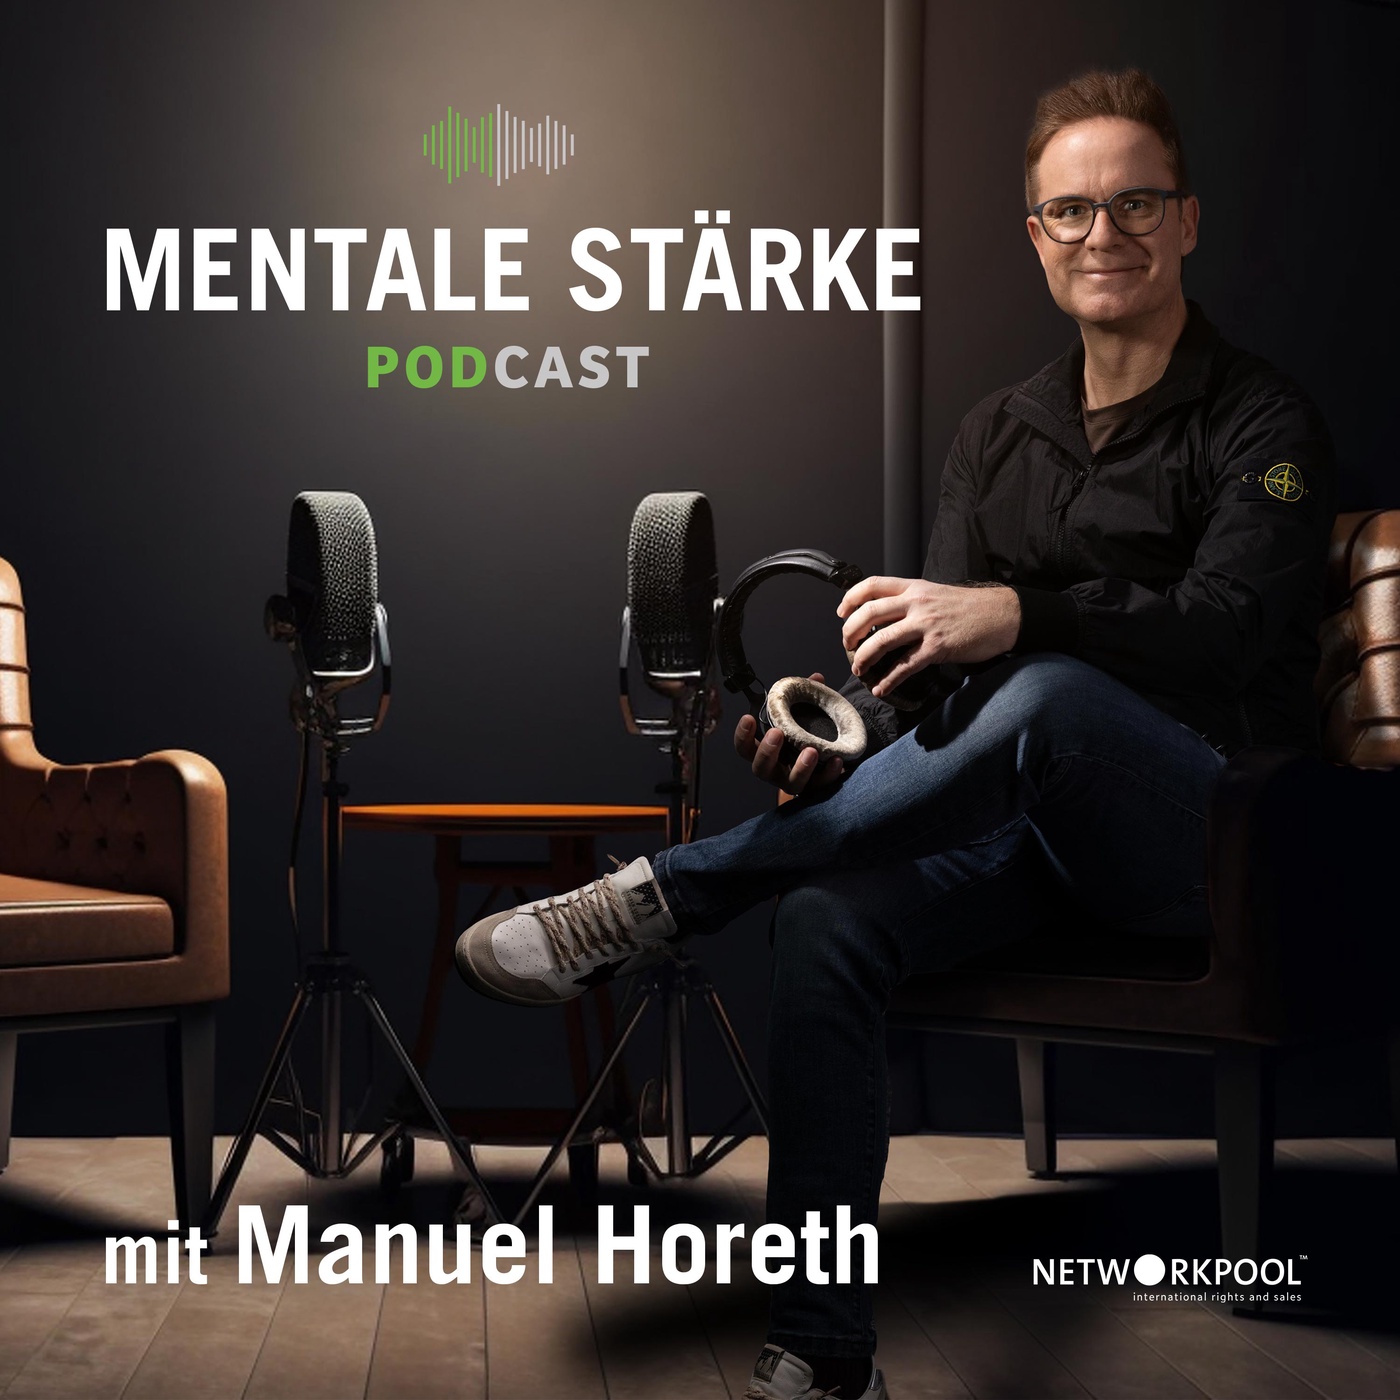 Mentale Stärke mit Manuel Horeth